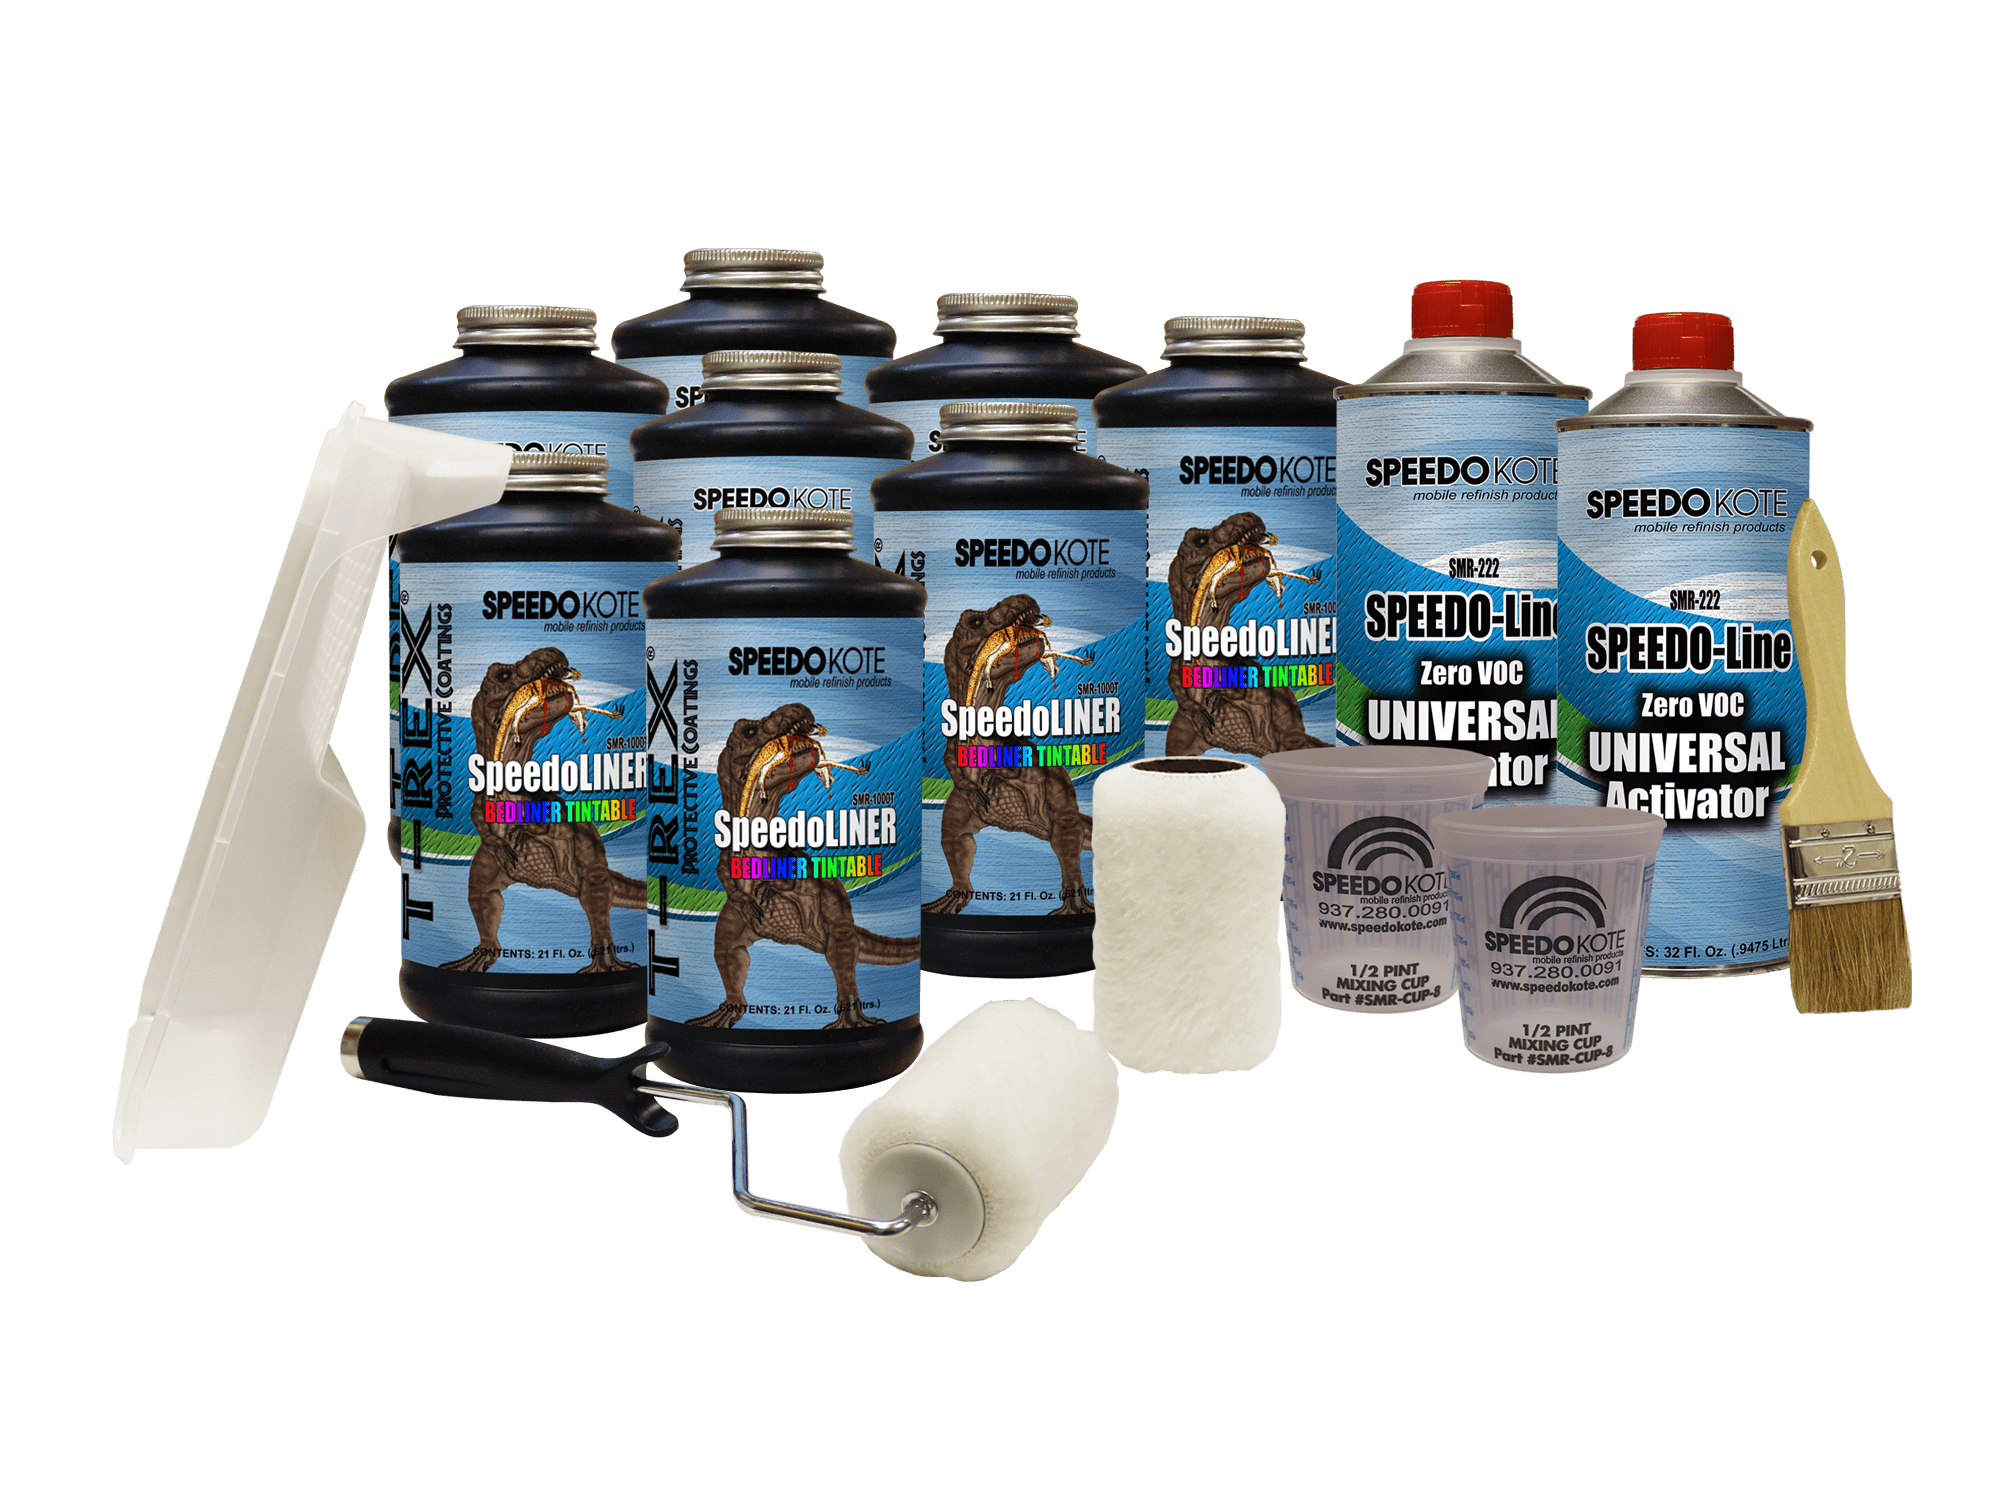 Walla Walla Environmental 37001 8.33 oz. Bug Juice Paint Additive